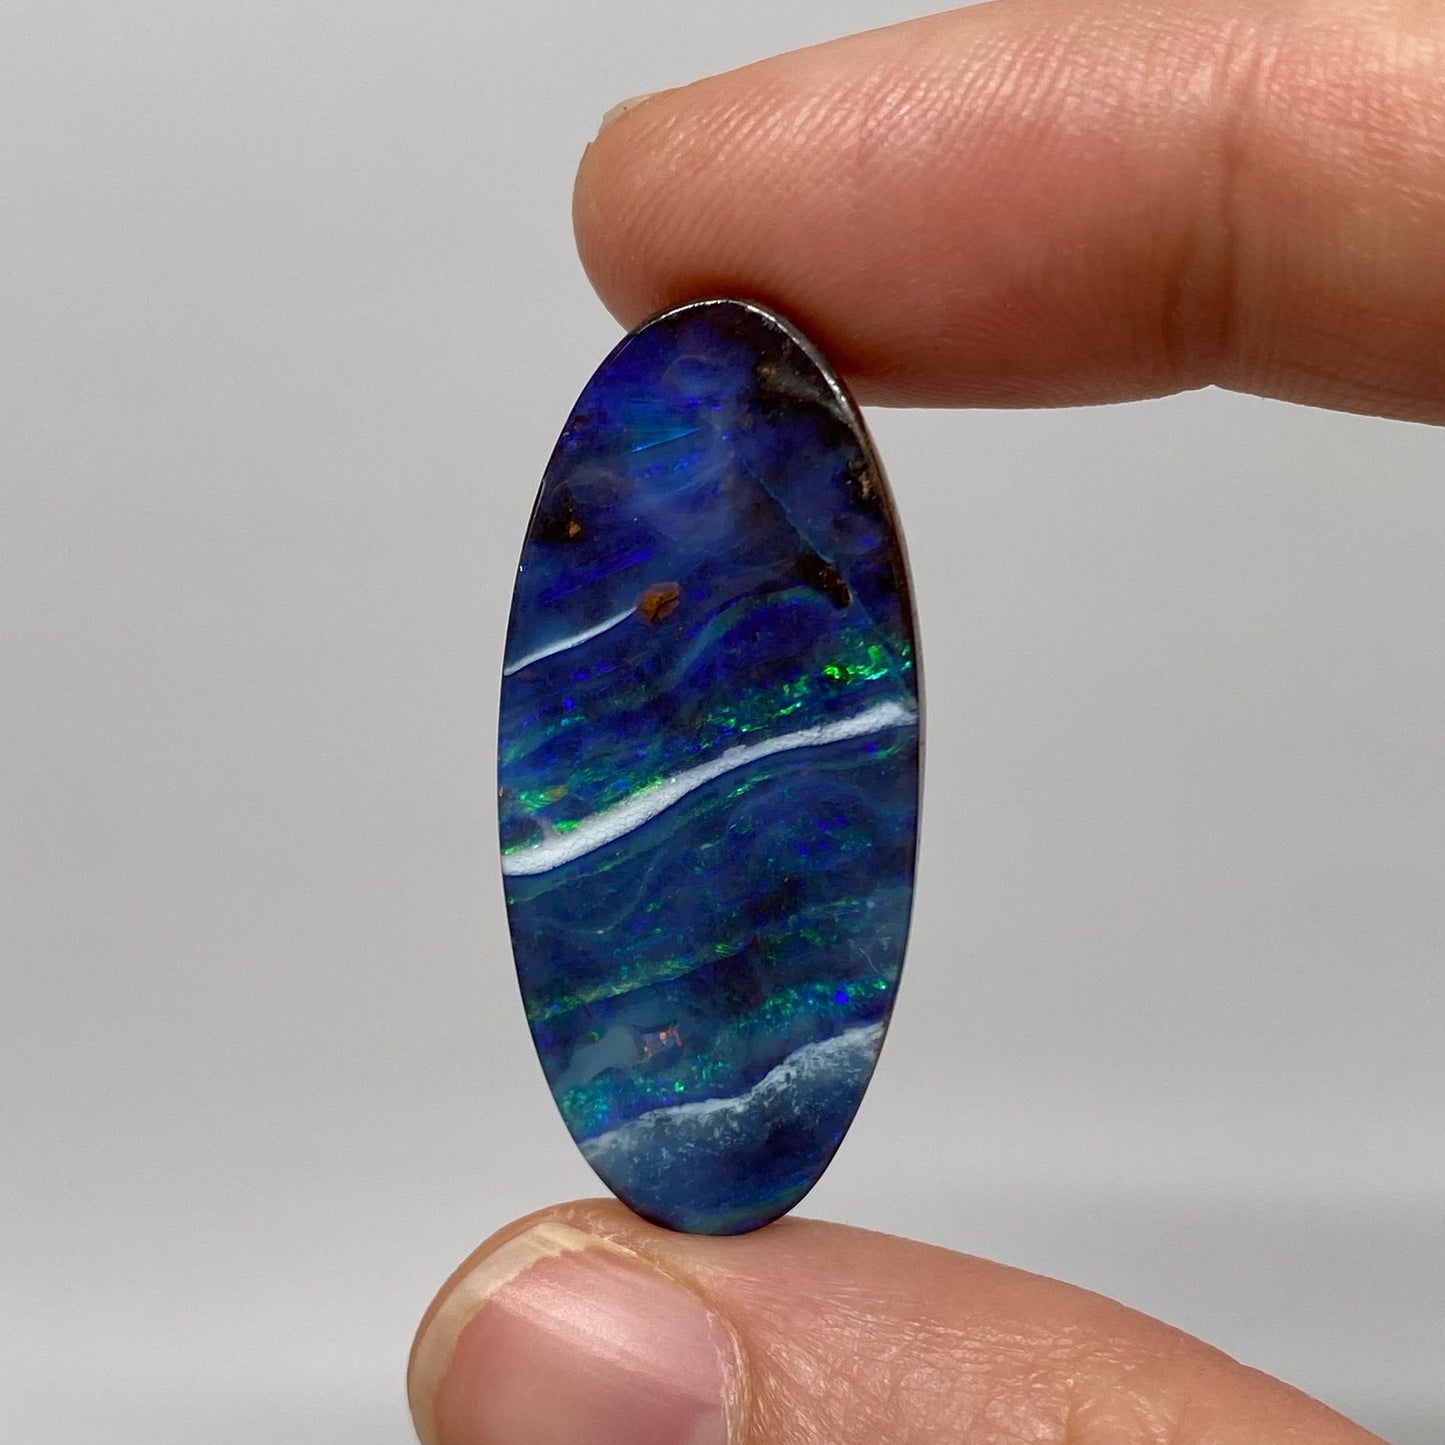 25.78 Ct long oval boulder opal